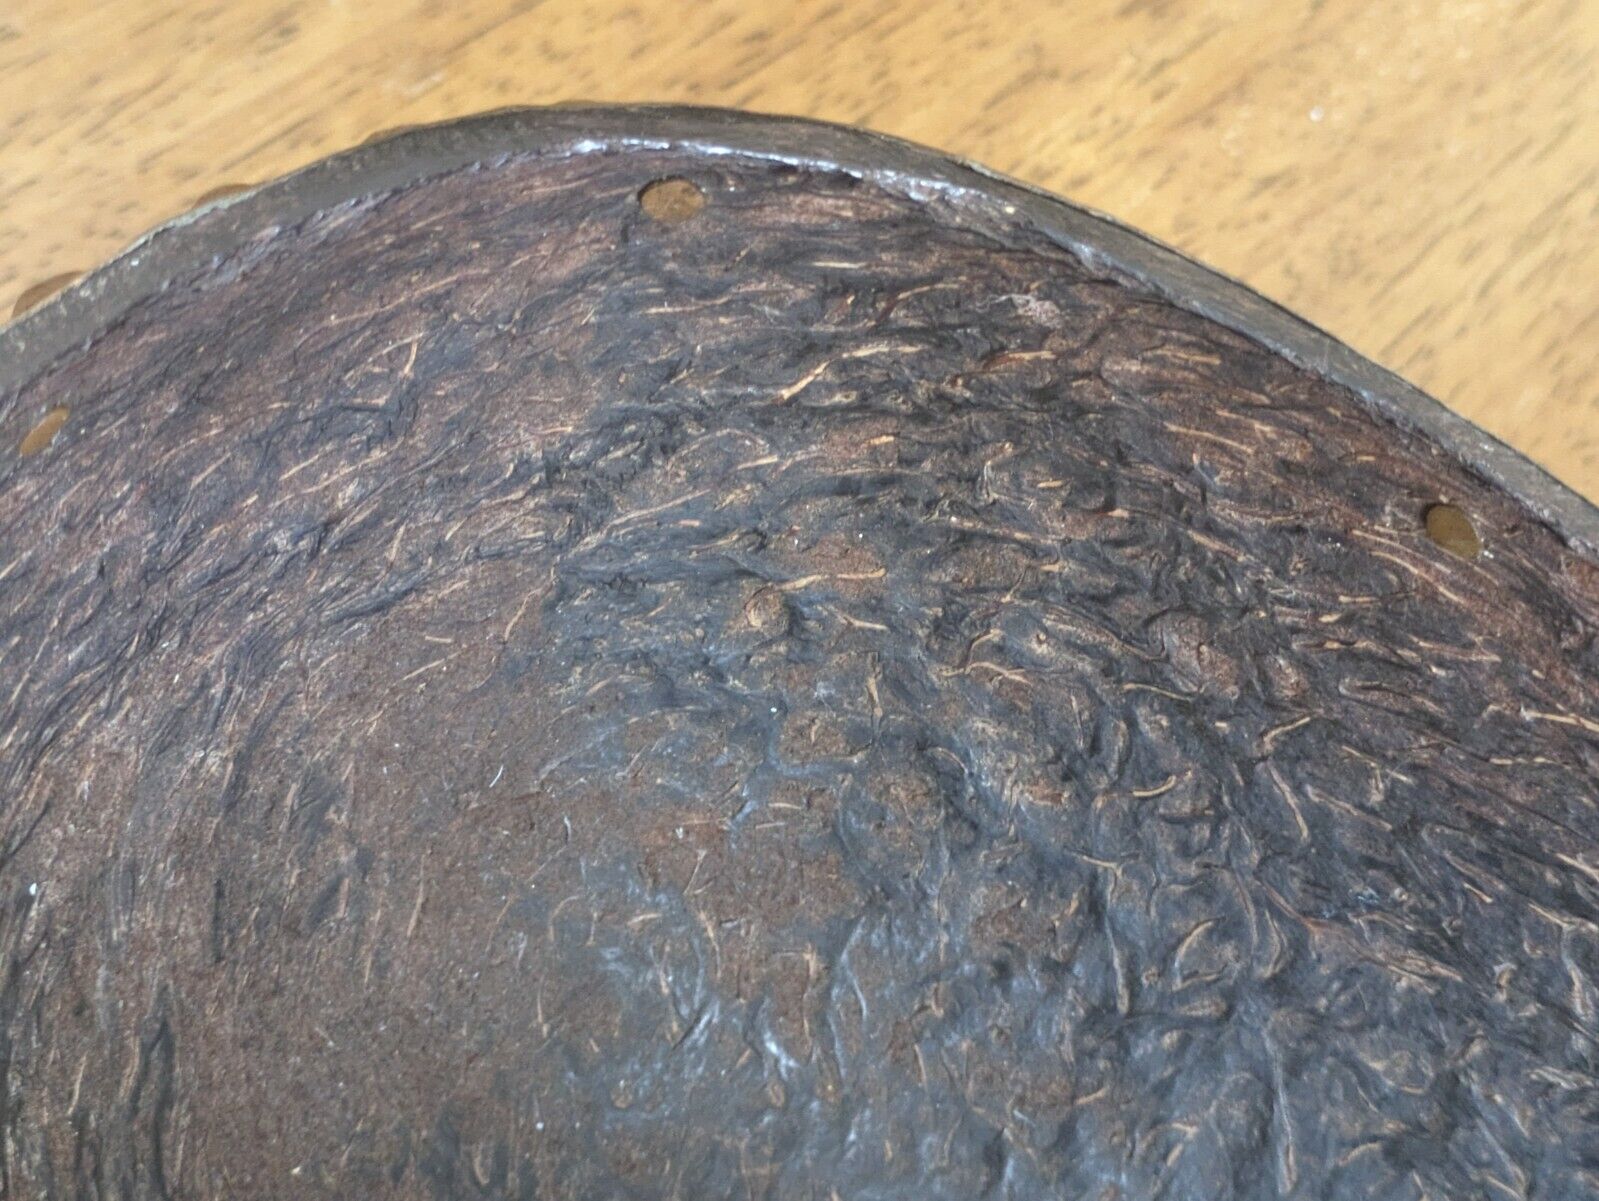 19th Century Half Coco De Mer Seychelles Nut Seed Shell Copper Bowl Dish Antique